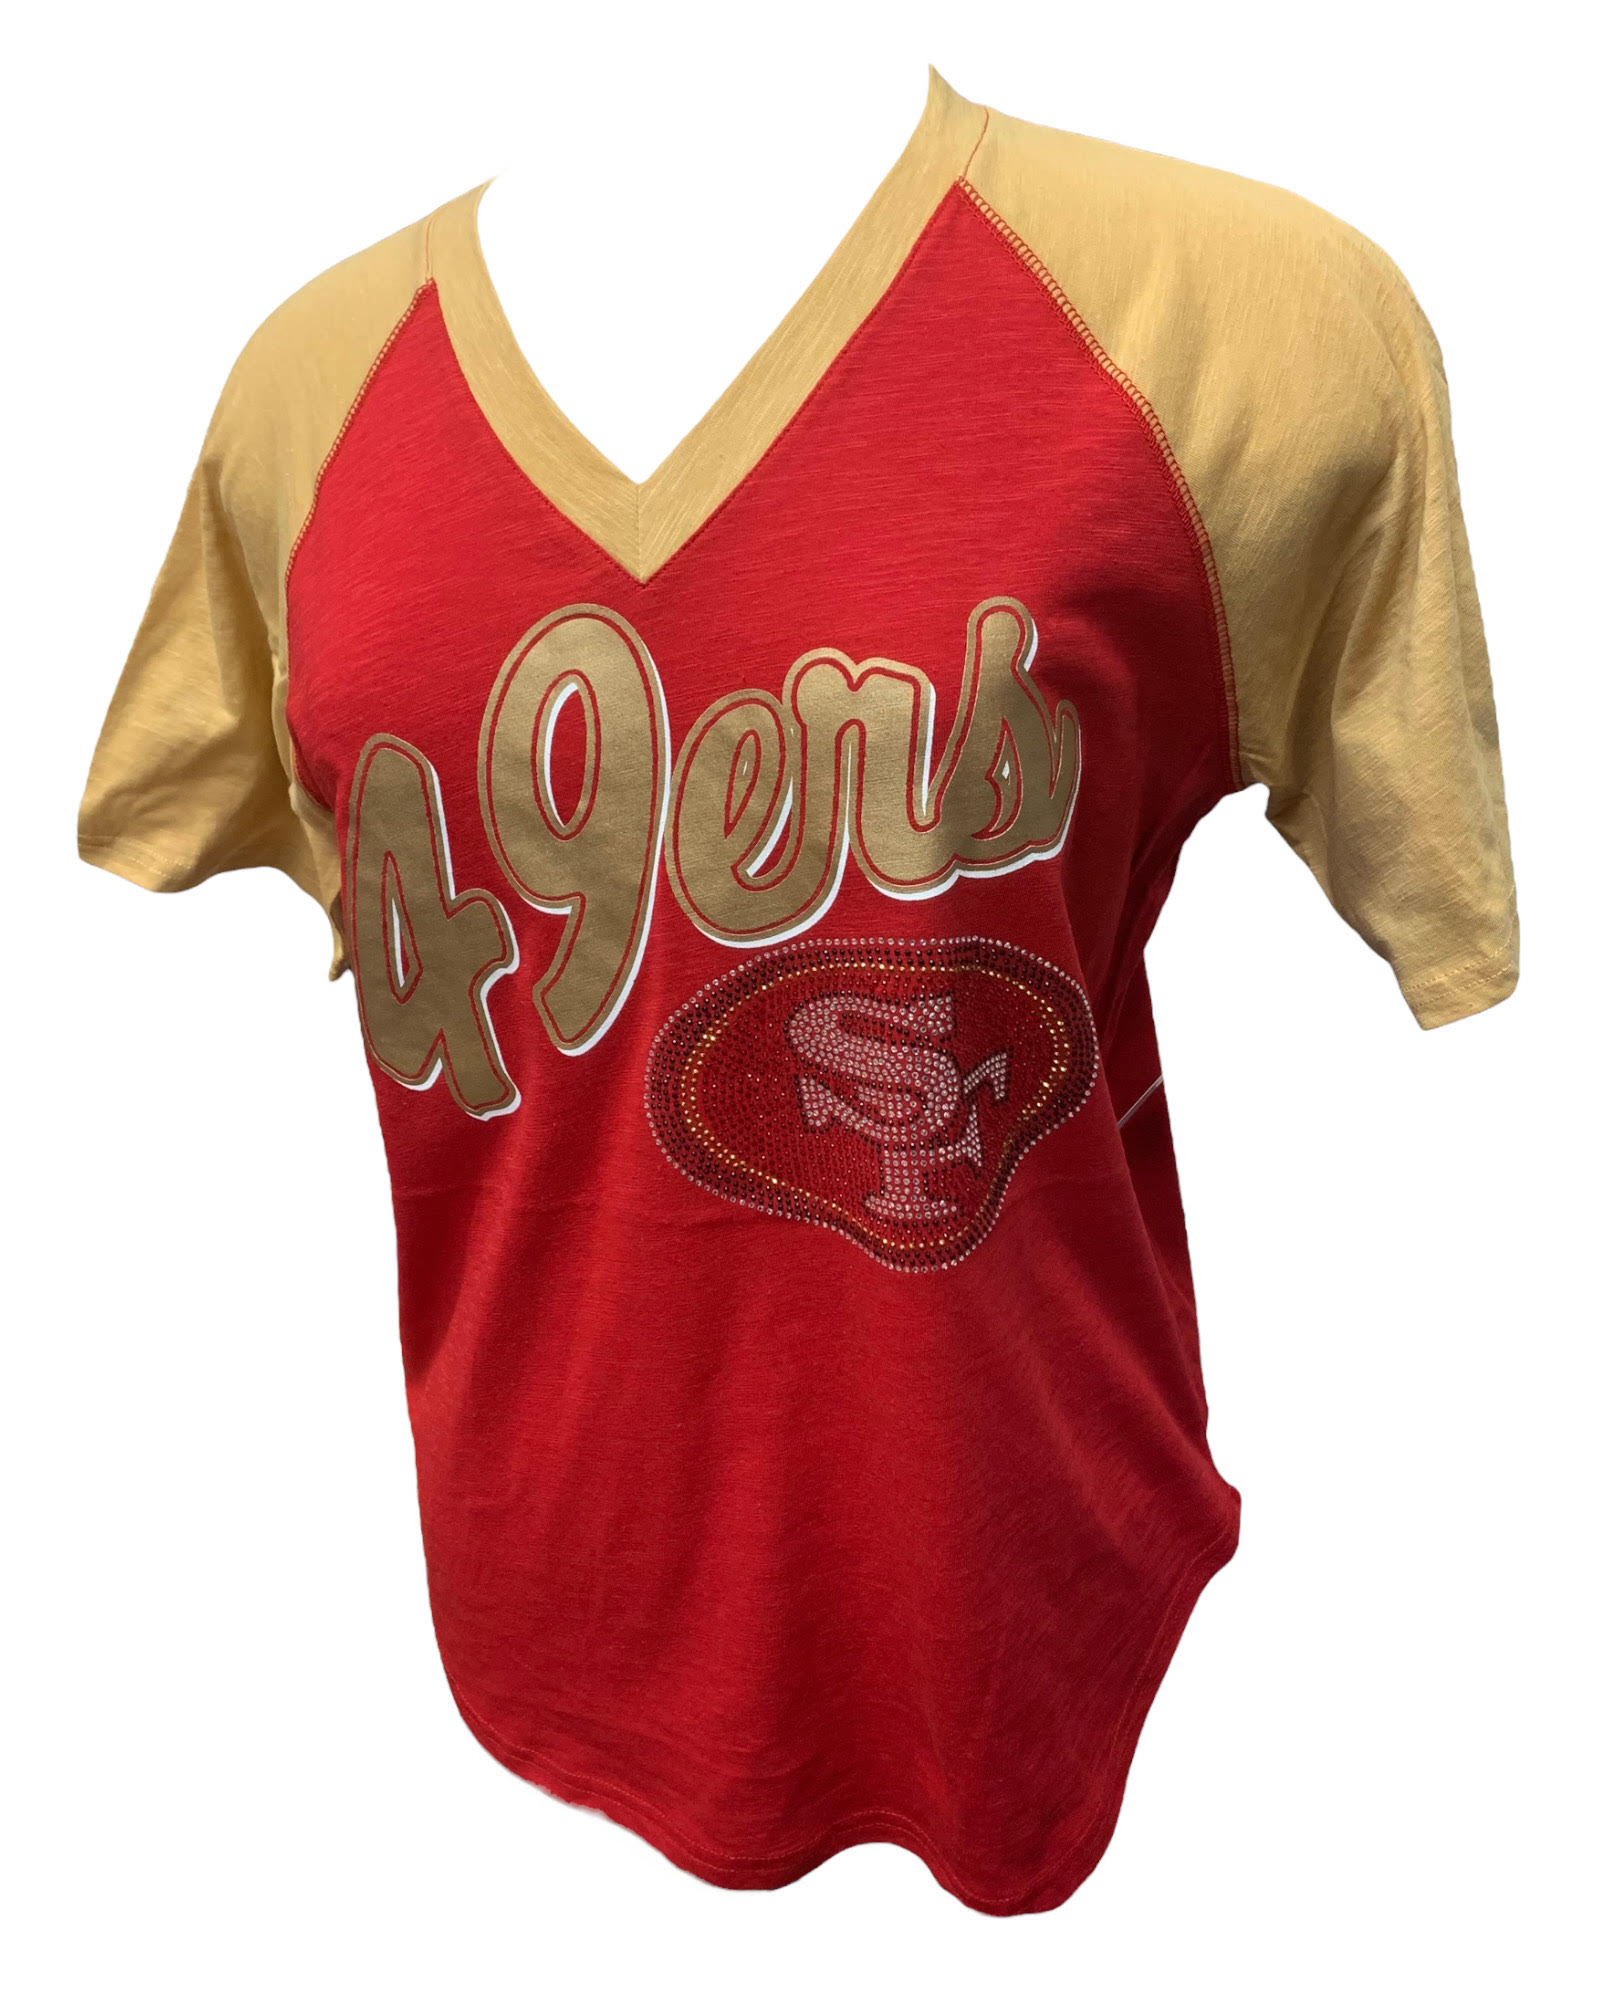 sf 49ers baseball jersey